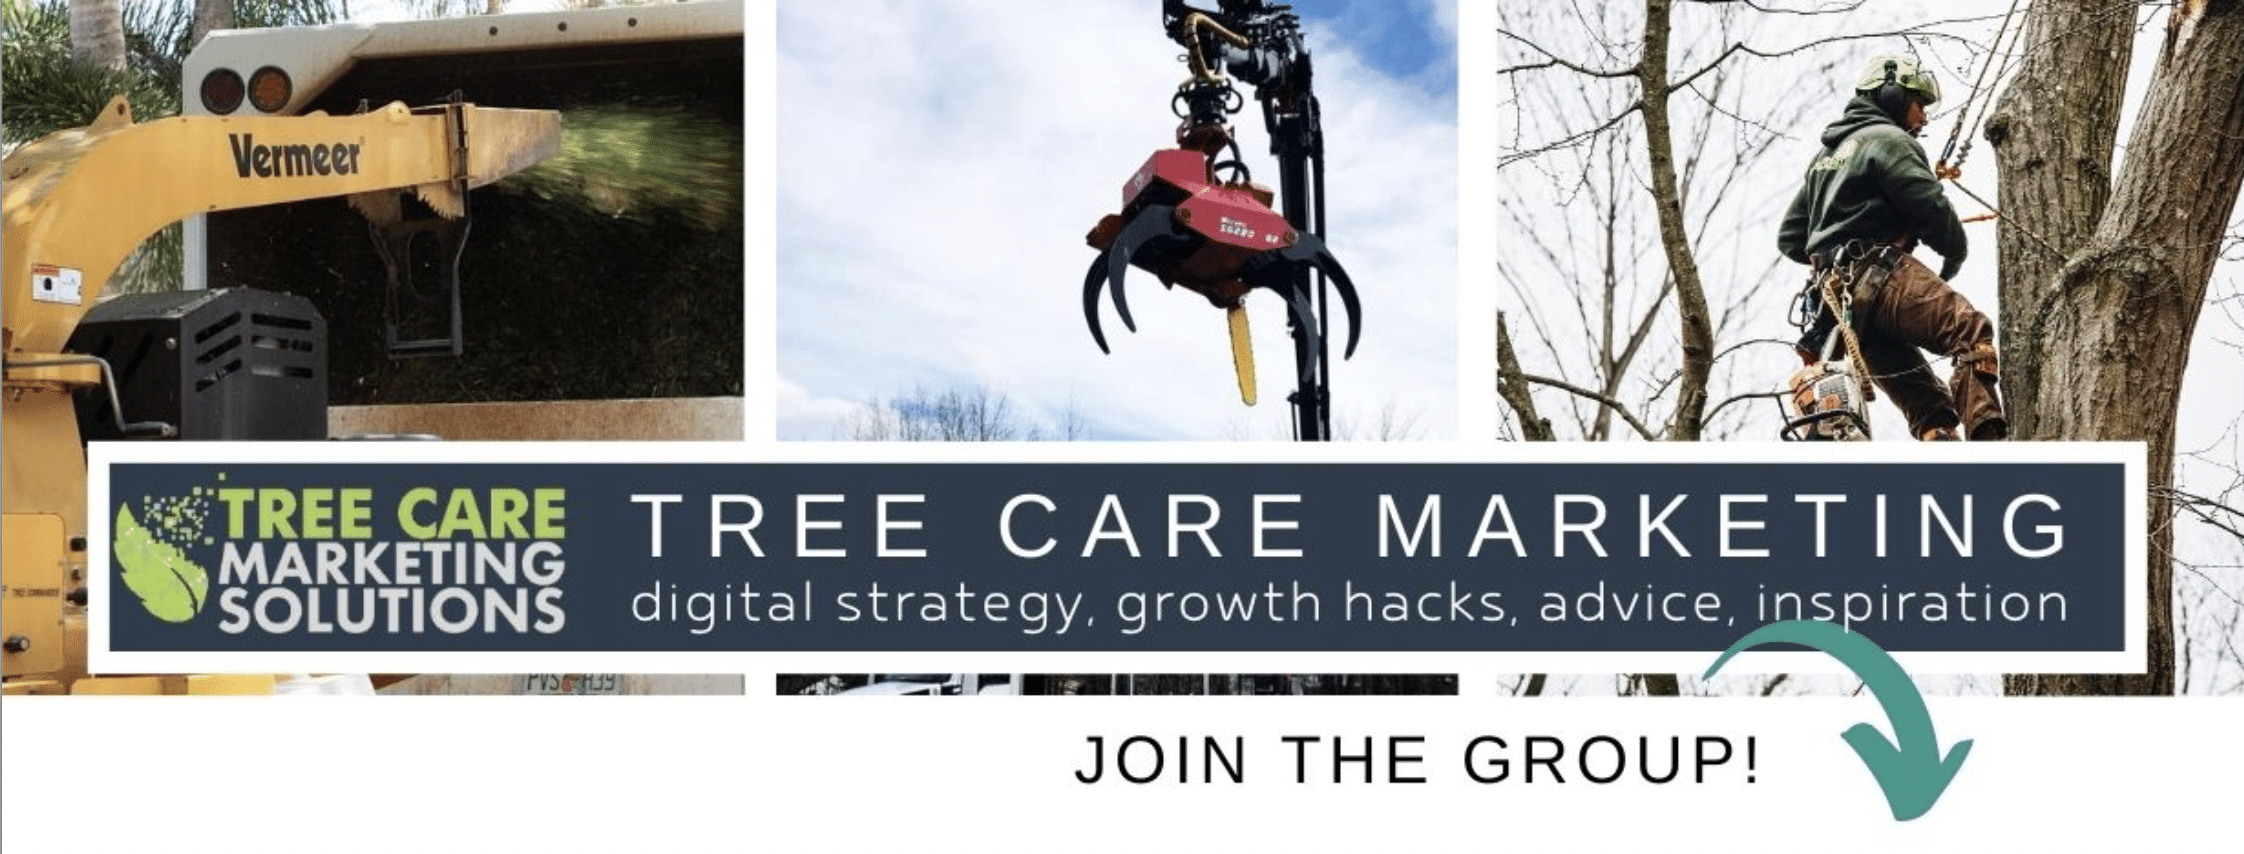 Tree Care Marketing Facebook Group.